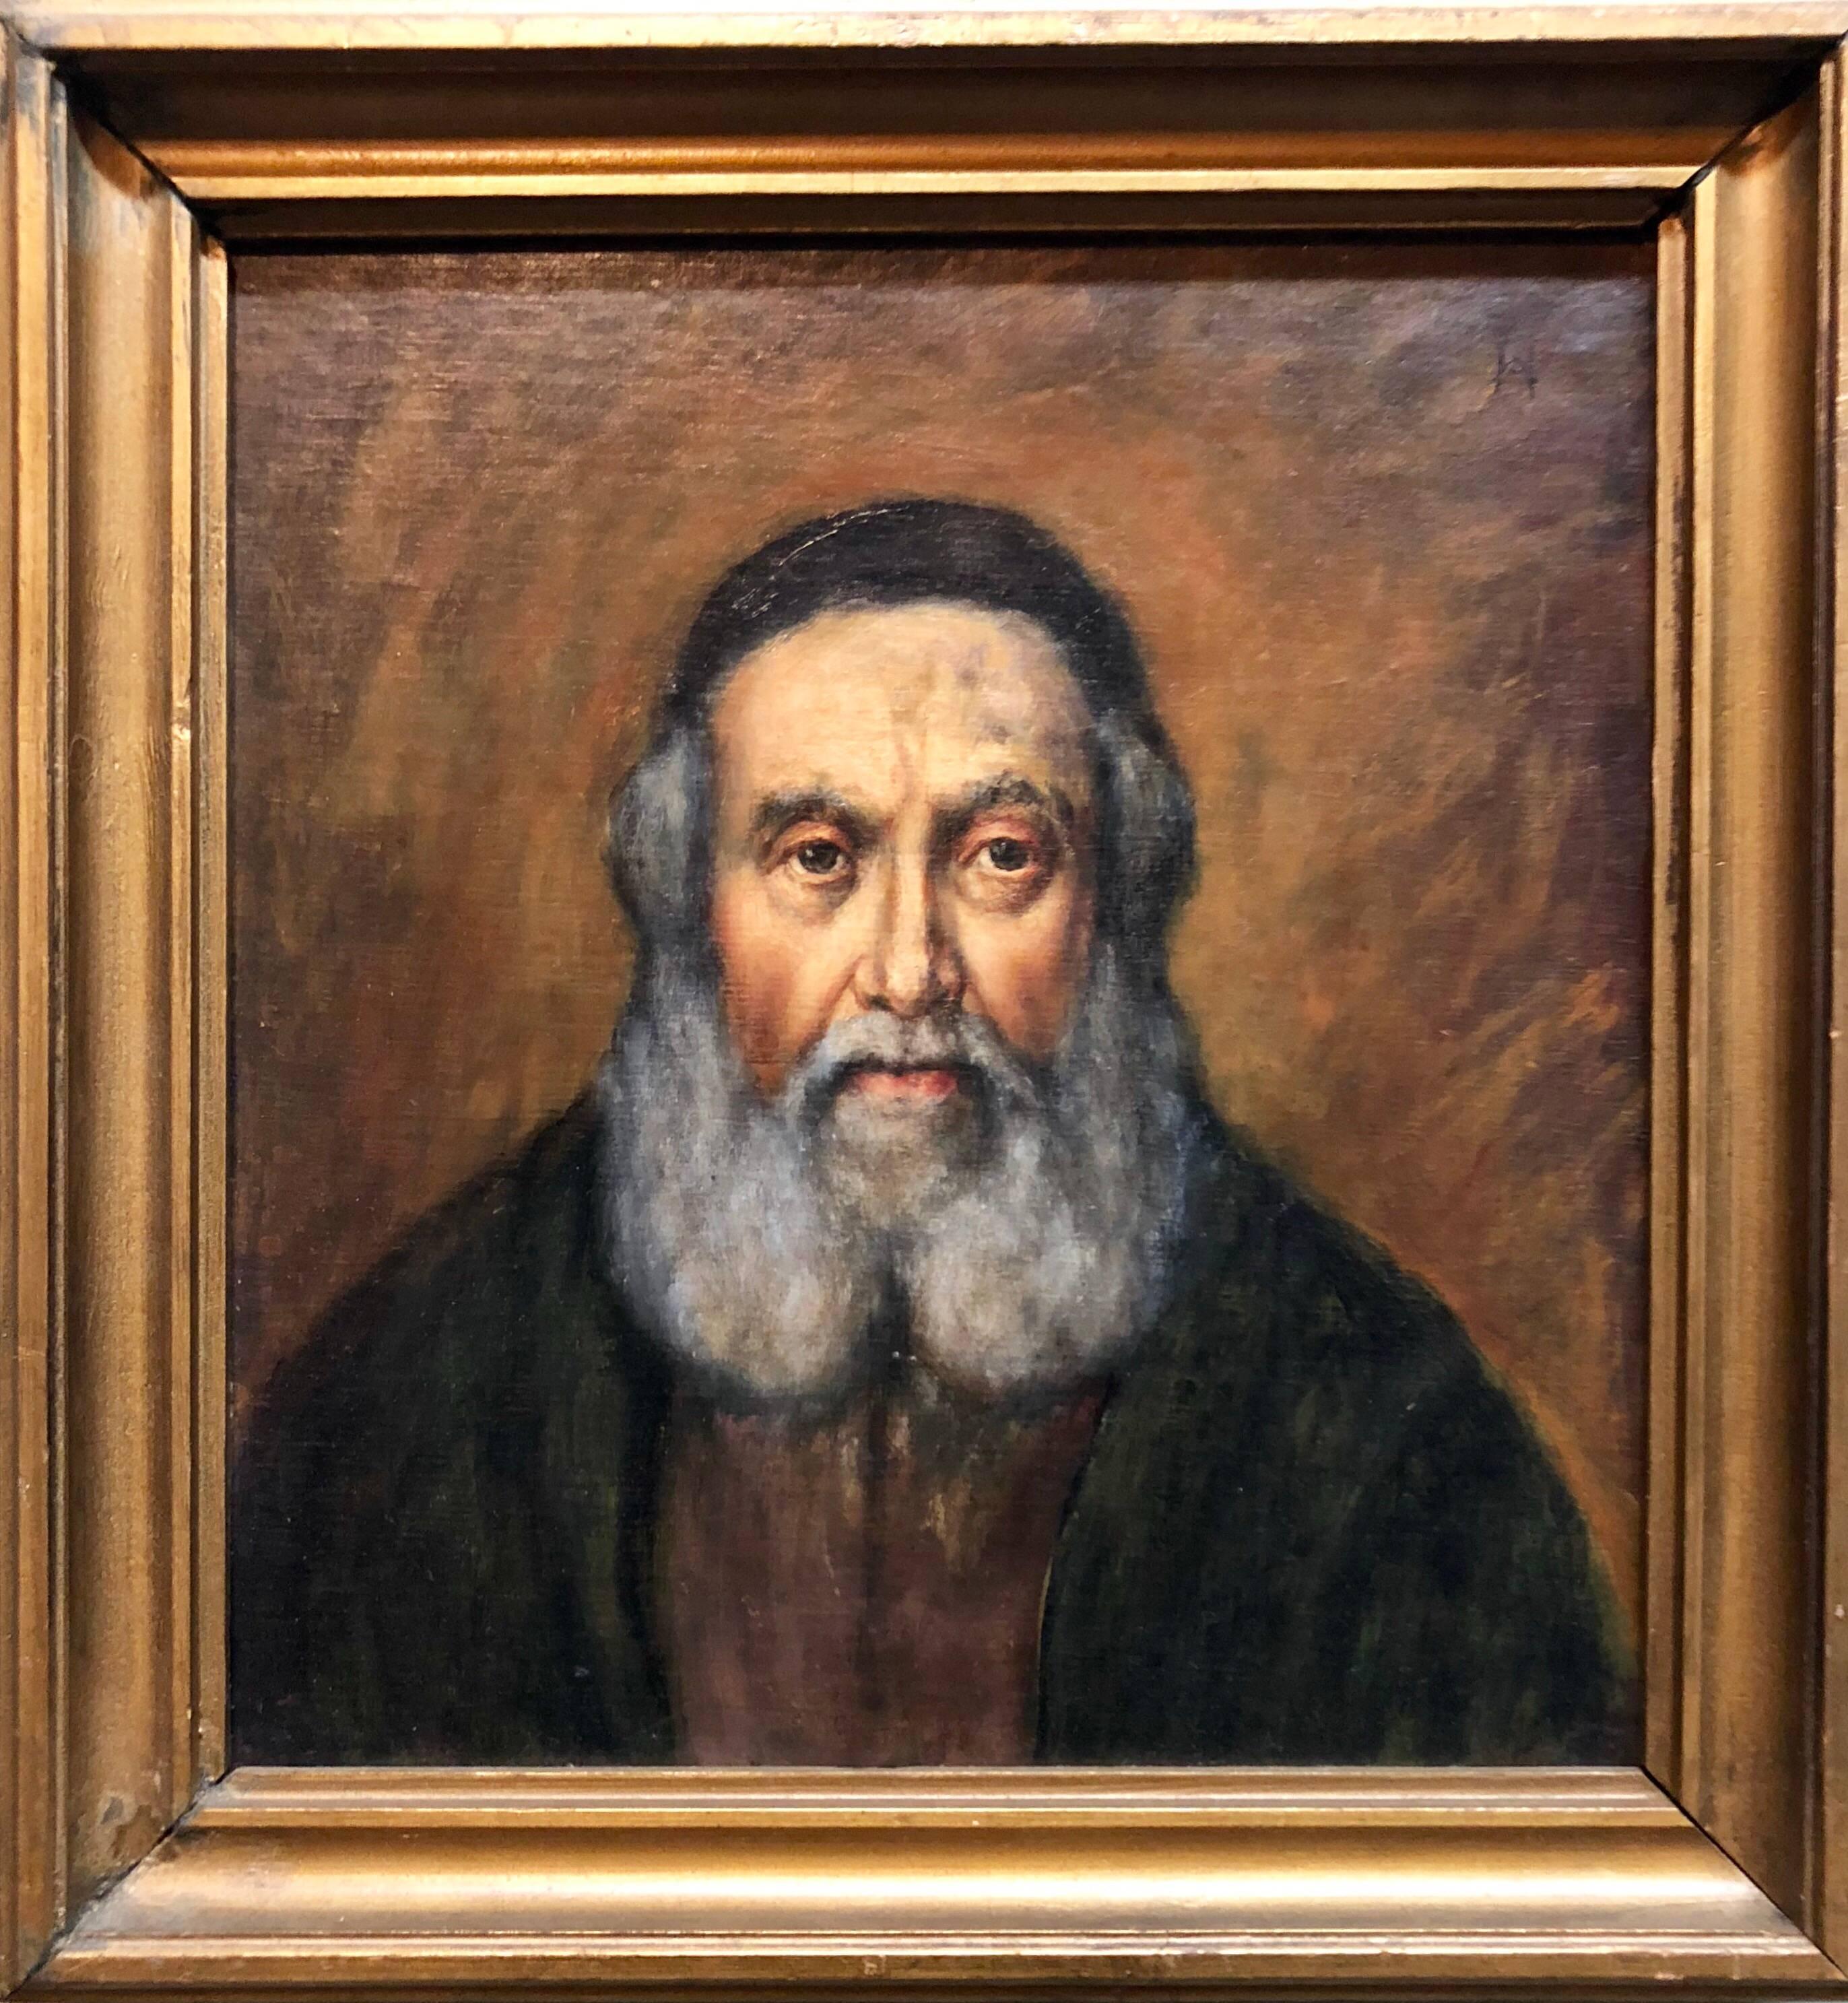  Judaica „The Rebbe“ europäisches Hasidic- Rabbiner-Porträt Ölgemälde